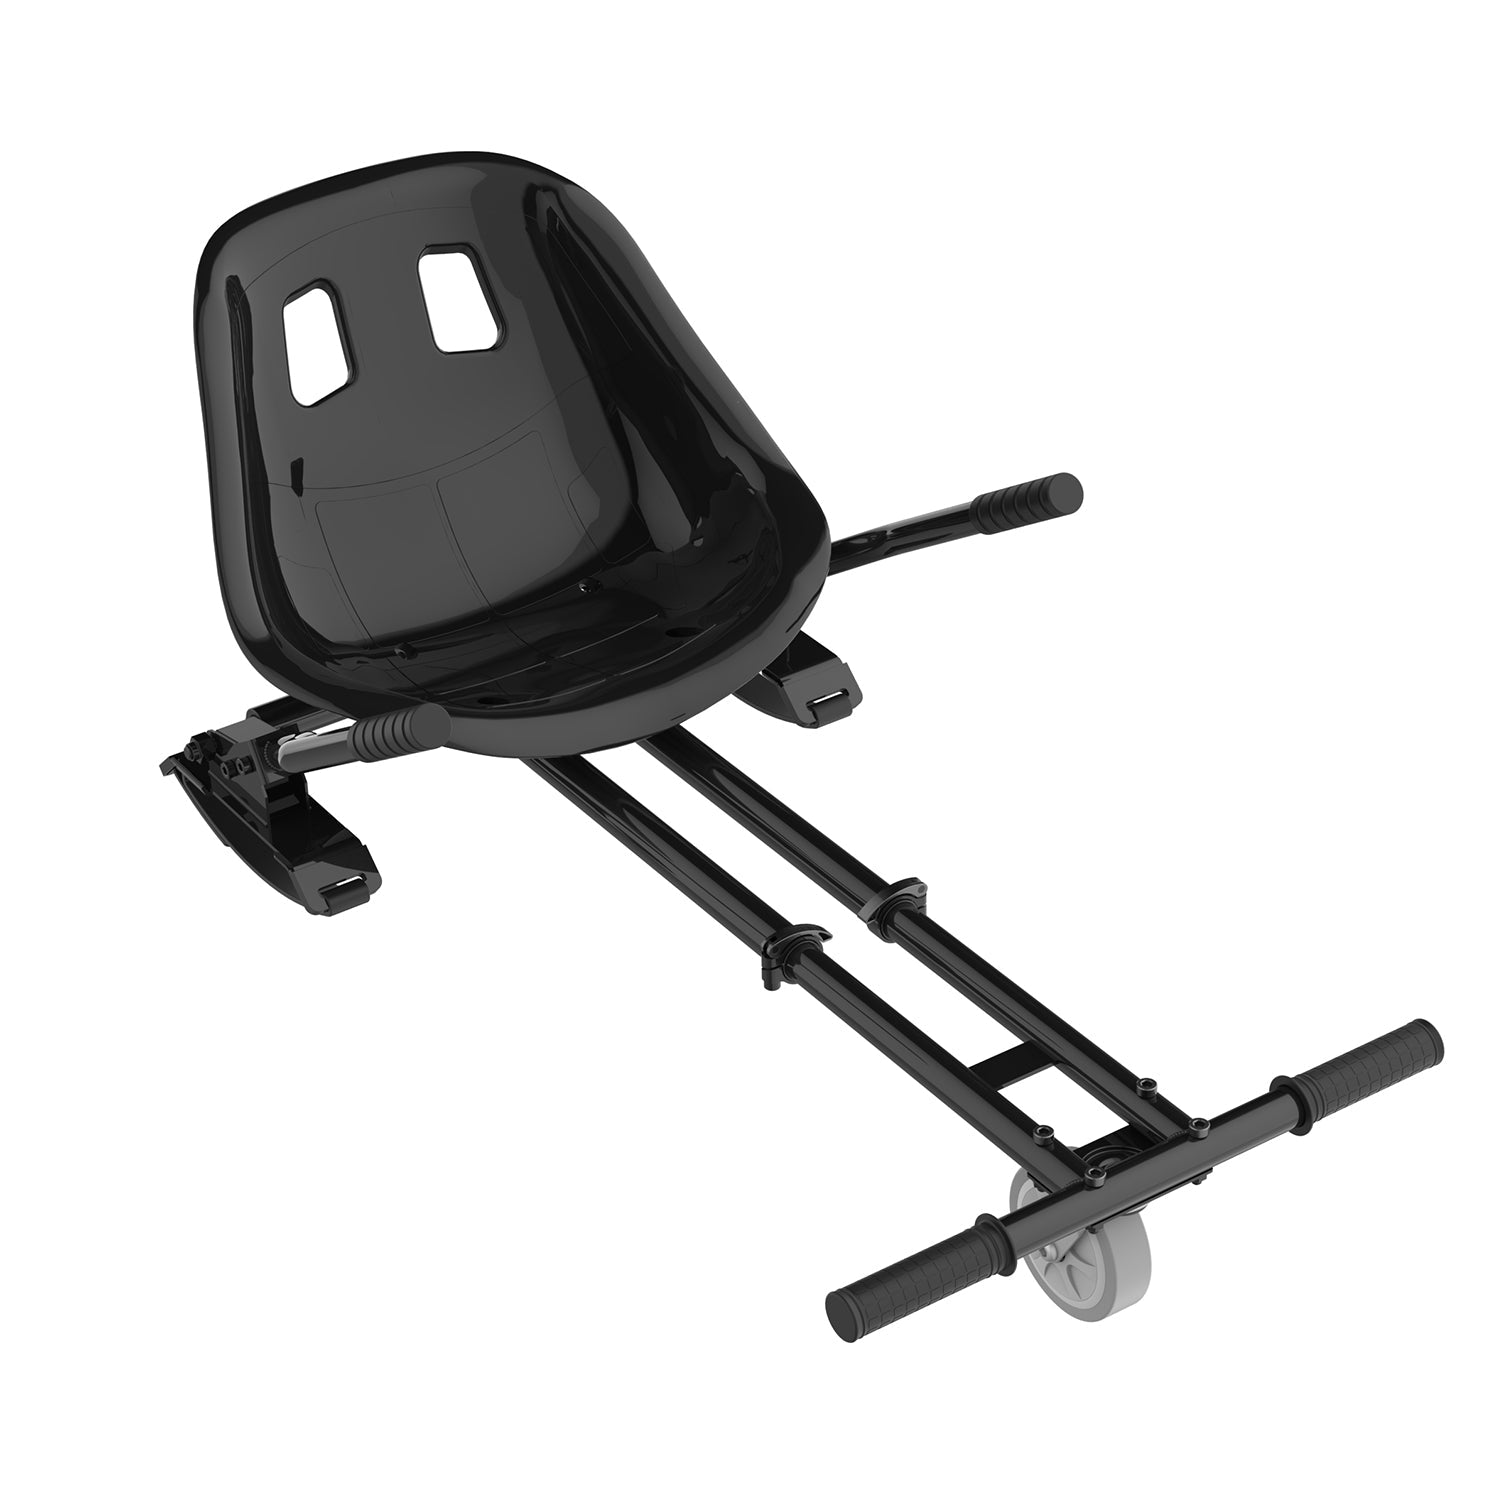 Go Kart Umbausatz Hoverboard Zubehör Befestigung Wagen Hoverboard